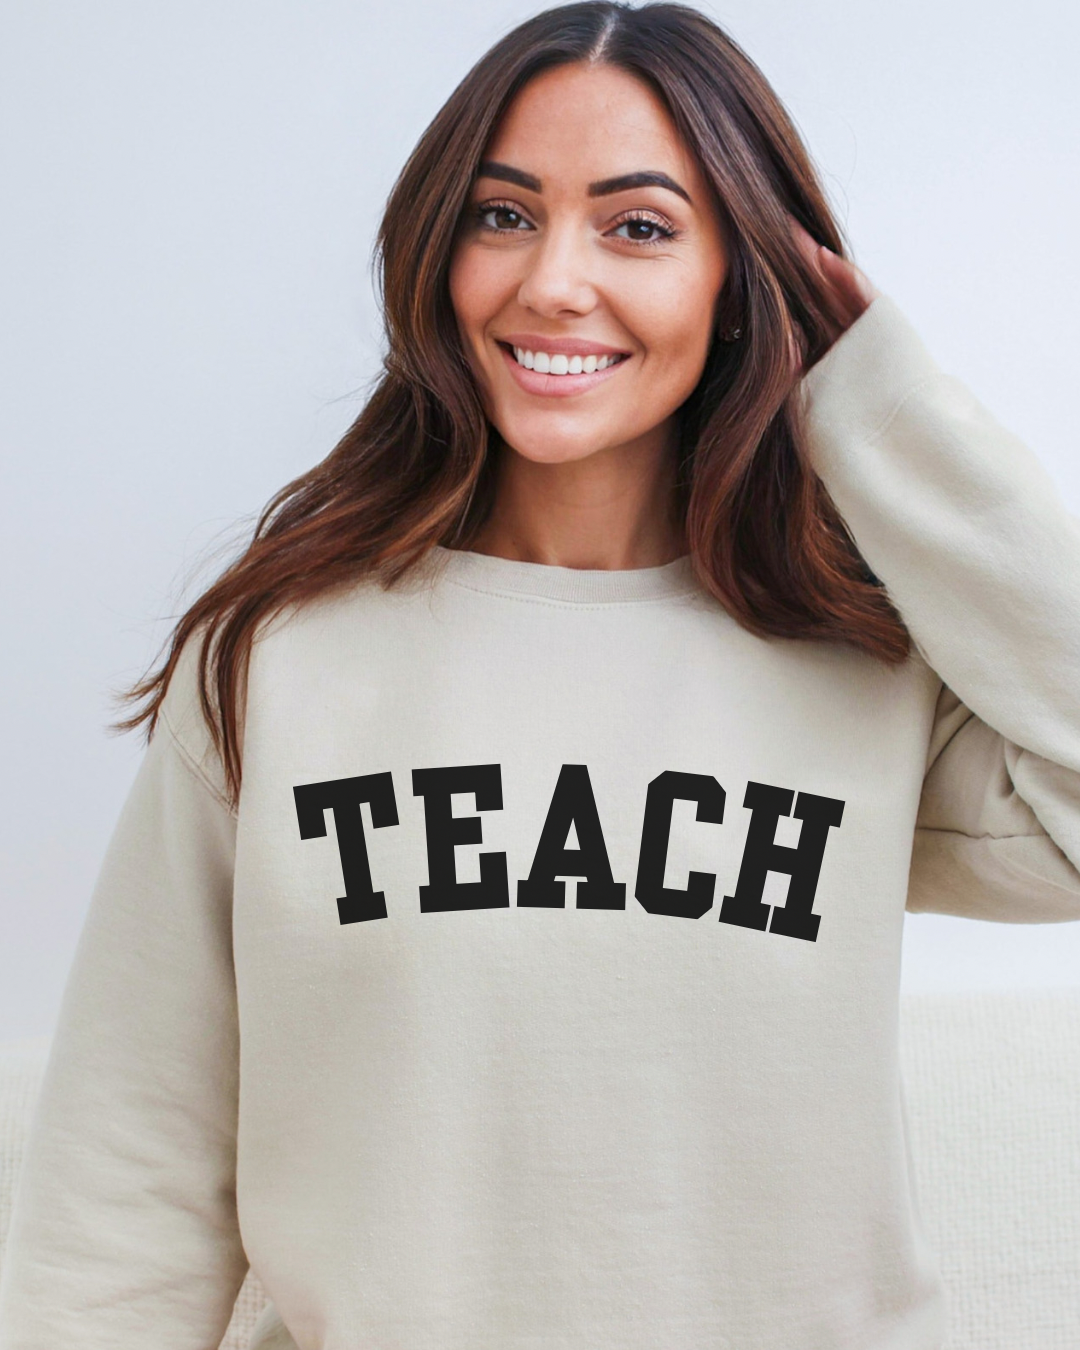 Teach Sweatshirt